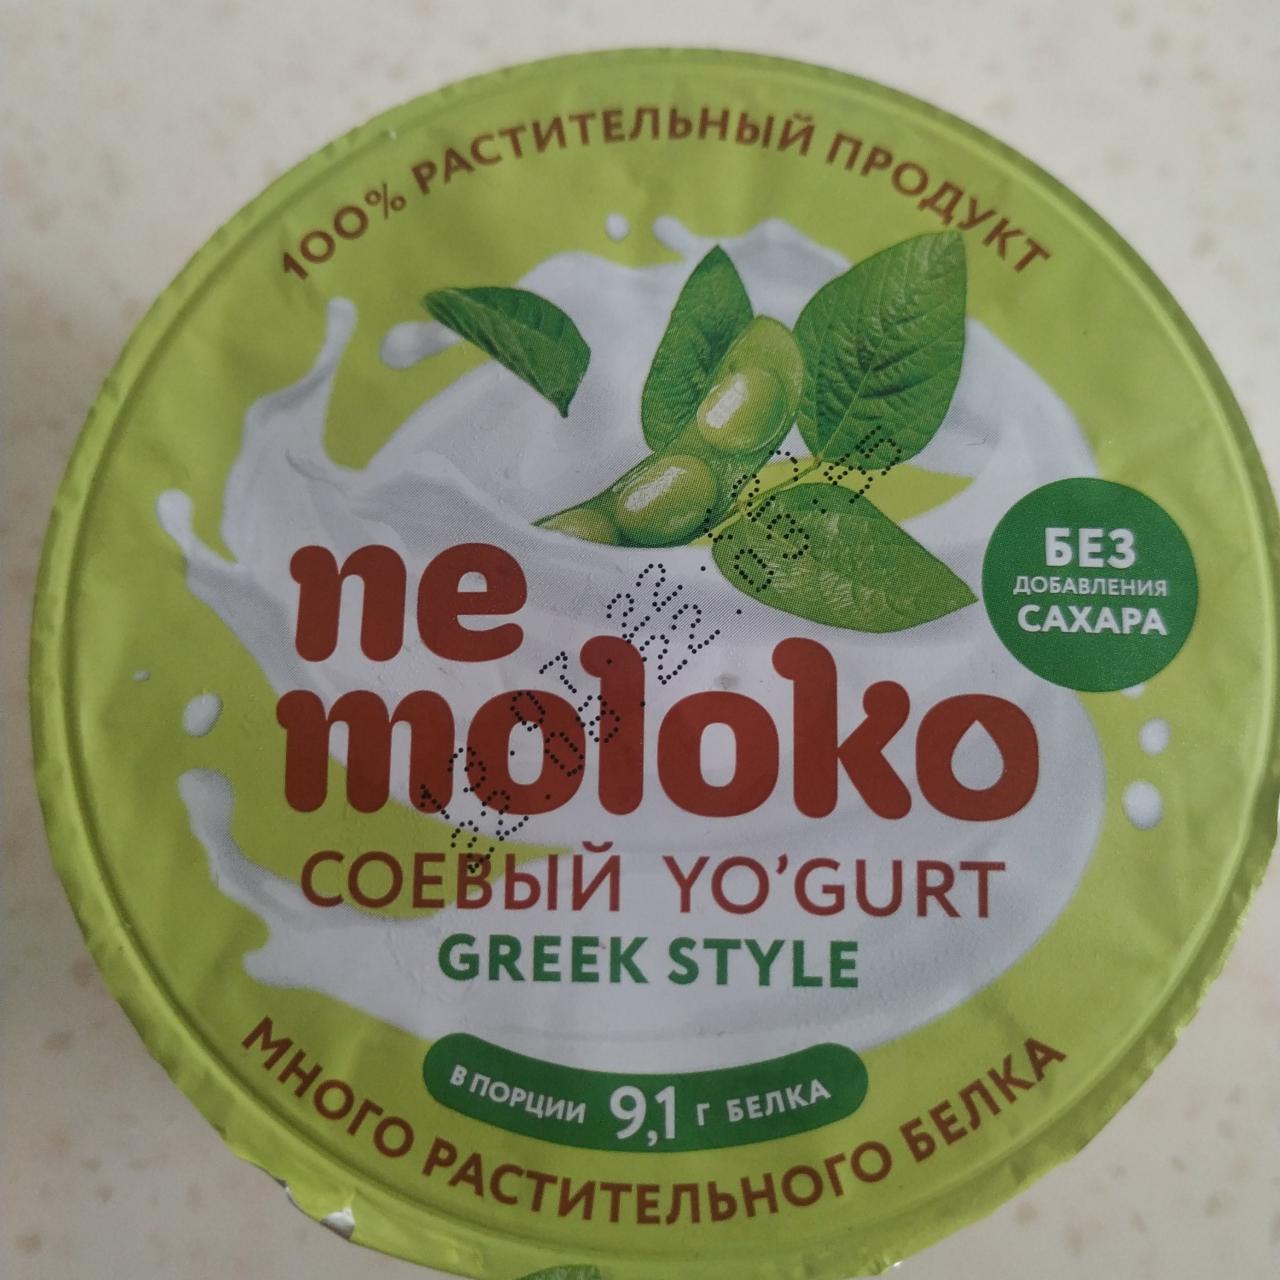 Фото - Соевый йогурт Yo'gurt Greek Style Ne moloko